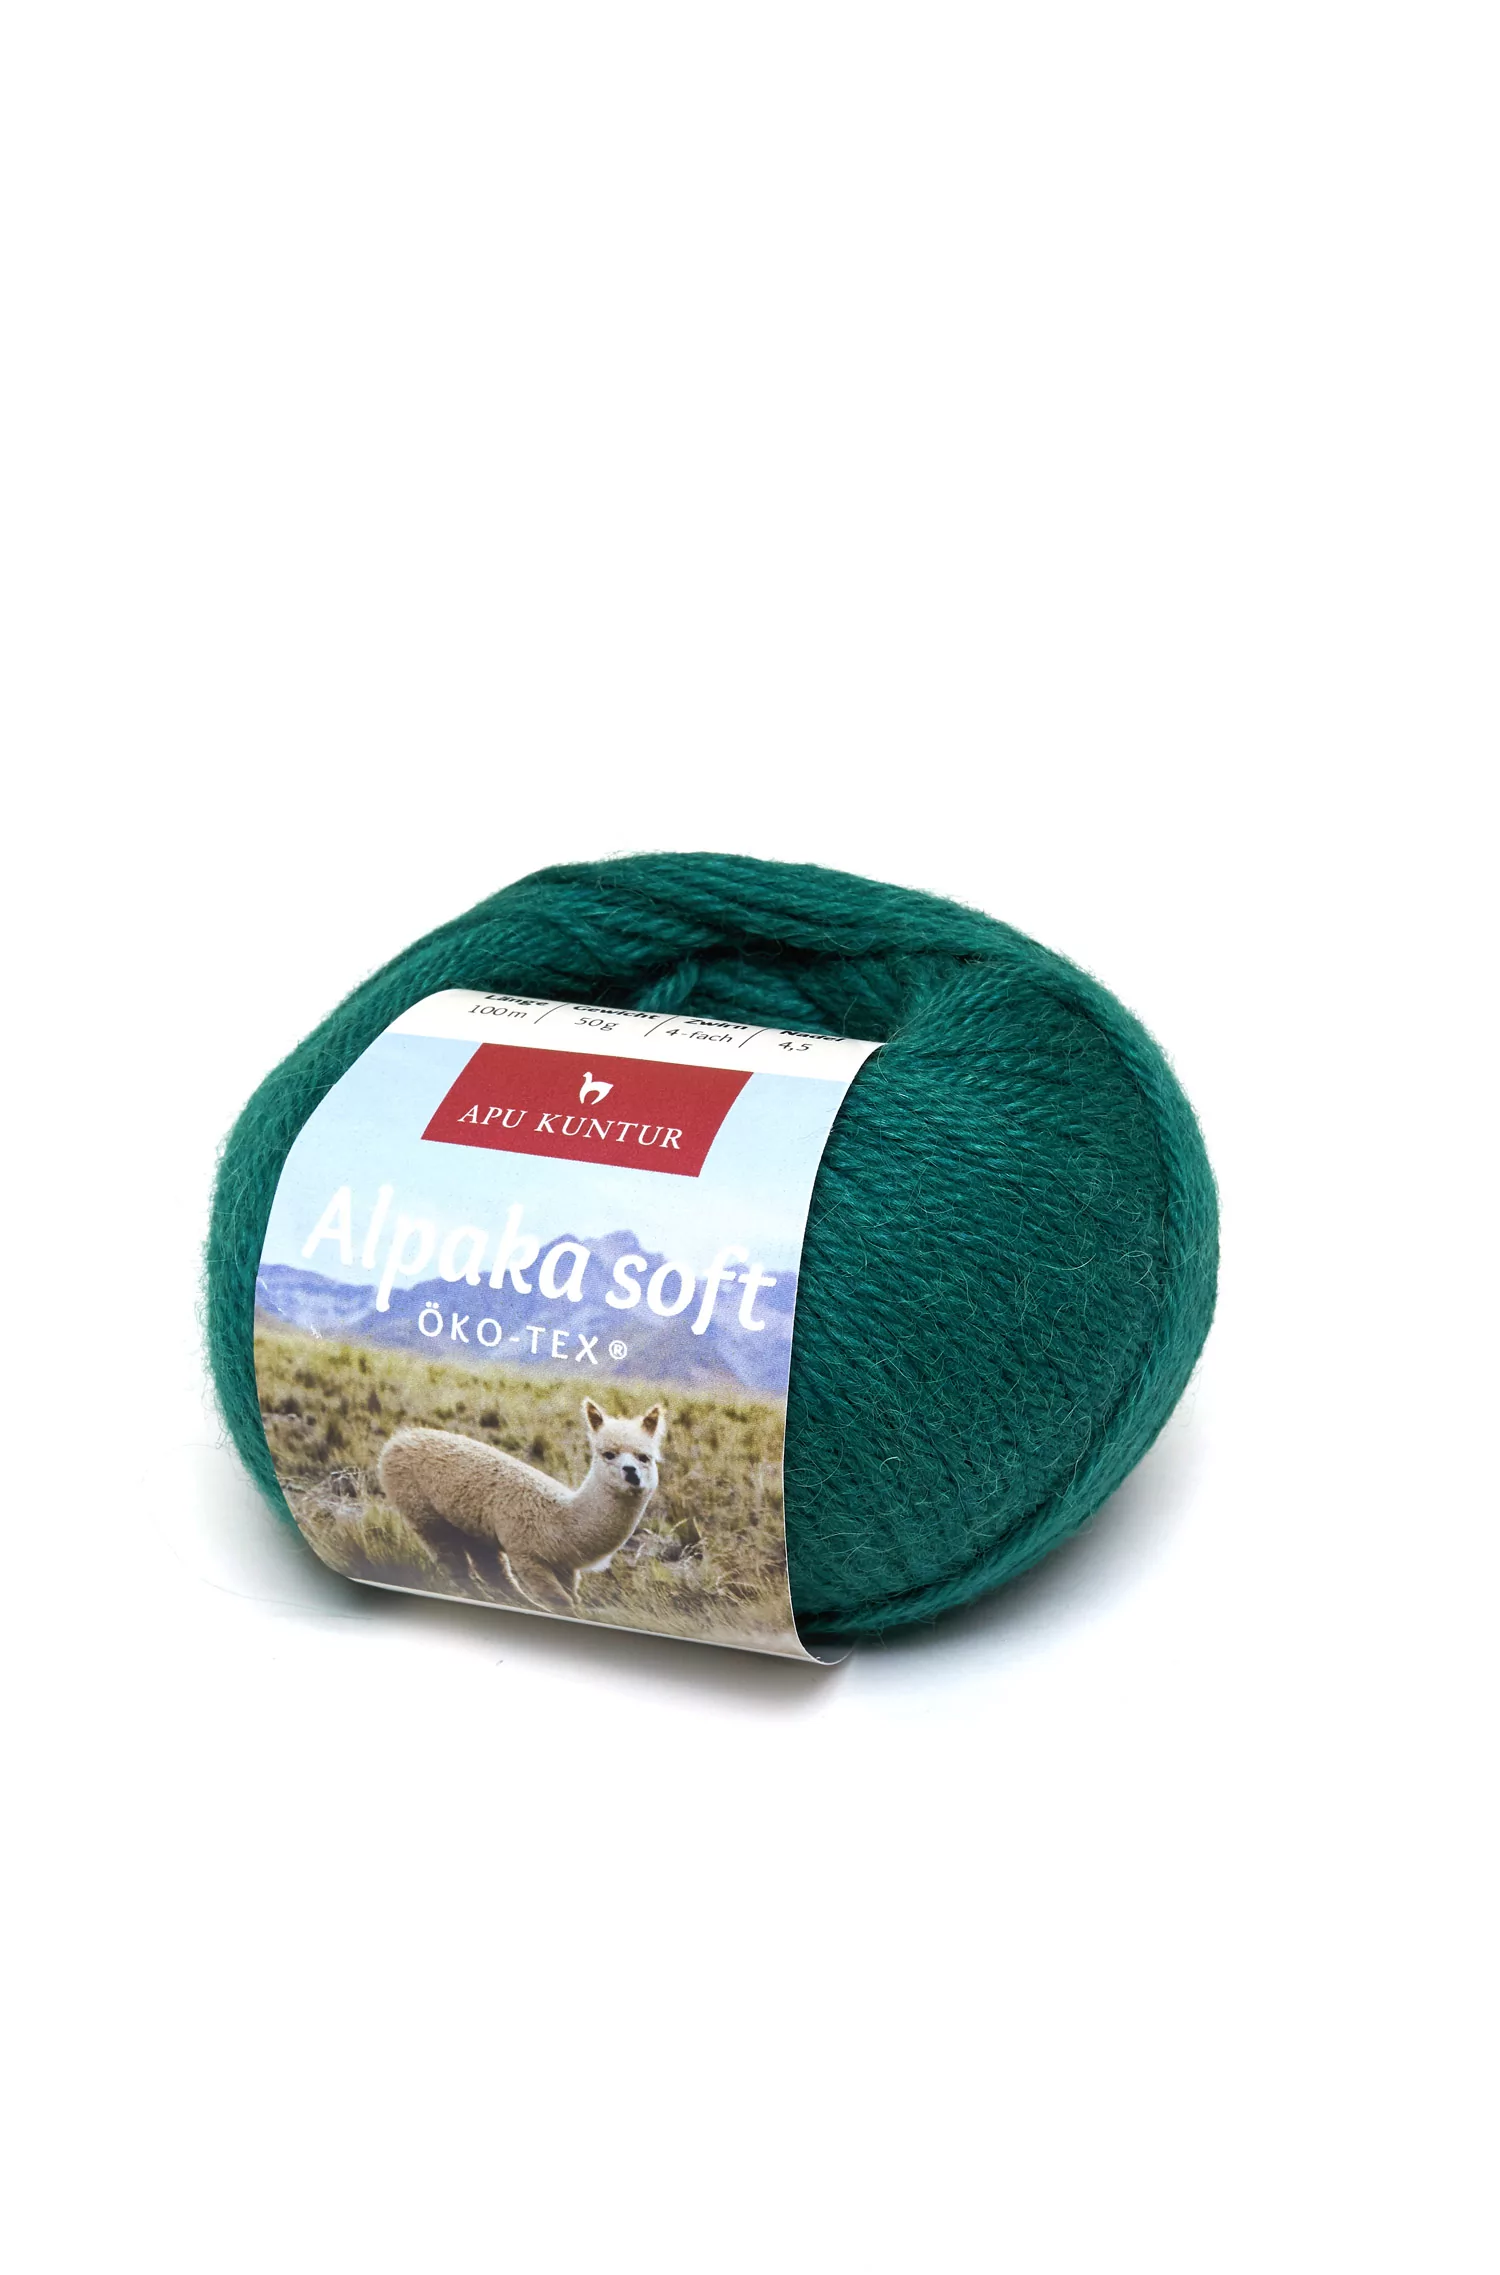 Gray Alpaca Wool Peru, For Windows at best price in Noida